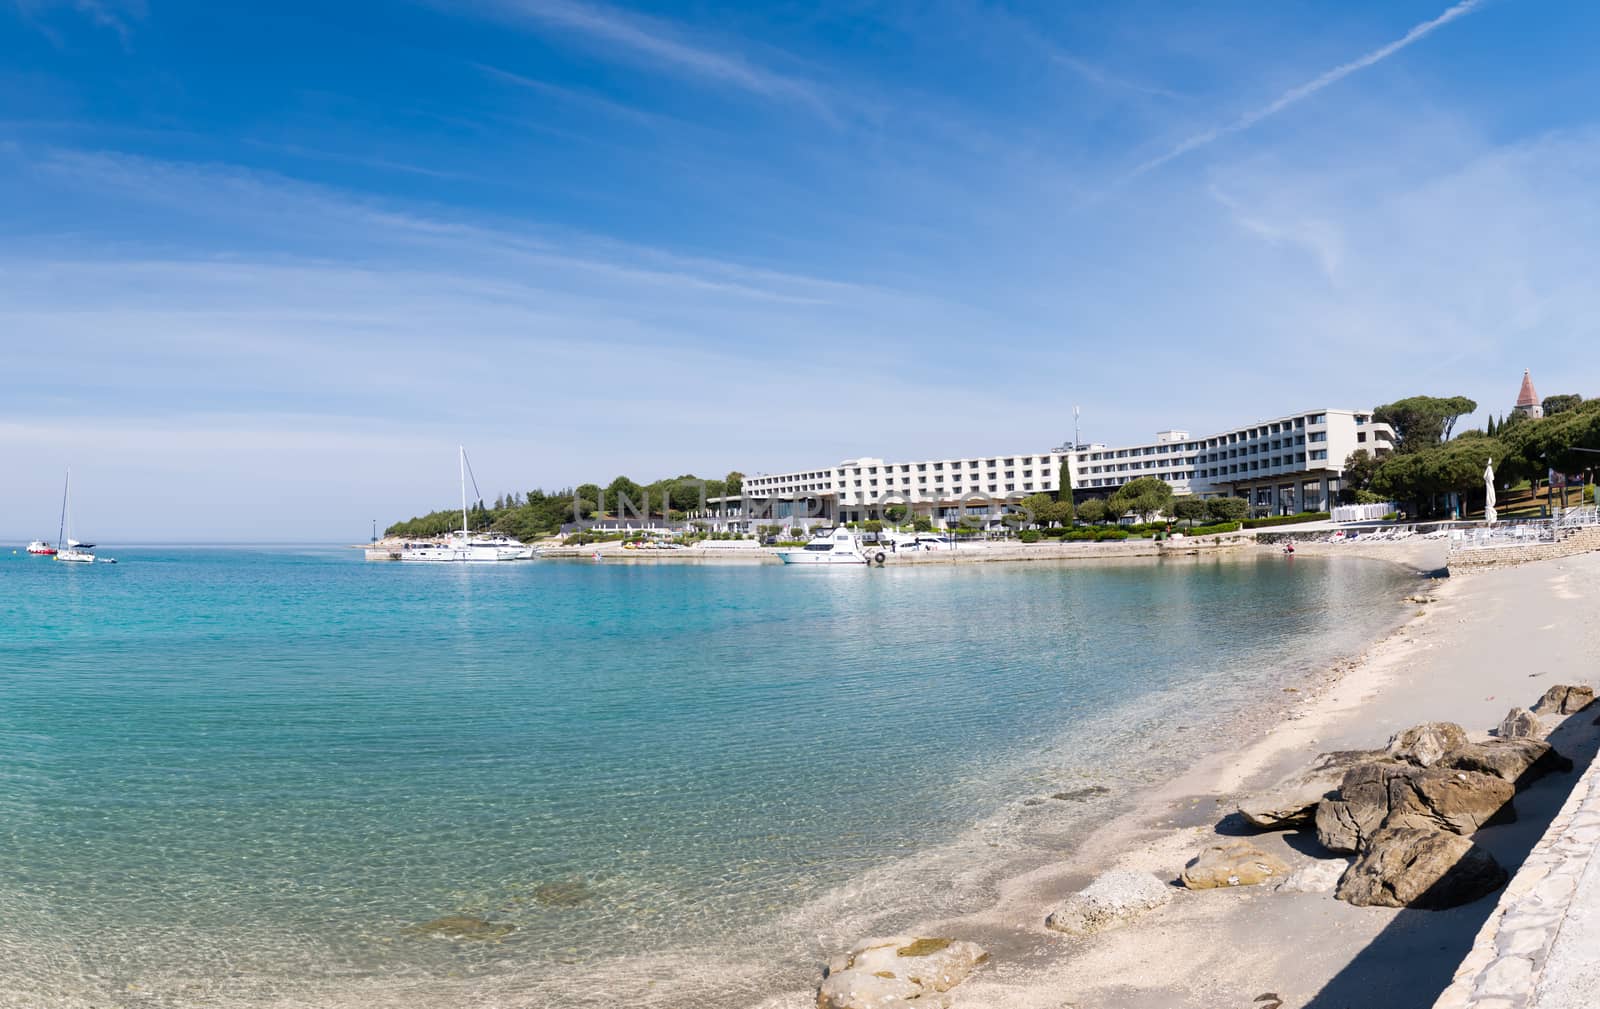 Seaside hotel with beach and turquoise water, Sveti Andrija or Red island near Rovinj, Croatia. A dike connects the island with Miskin island.